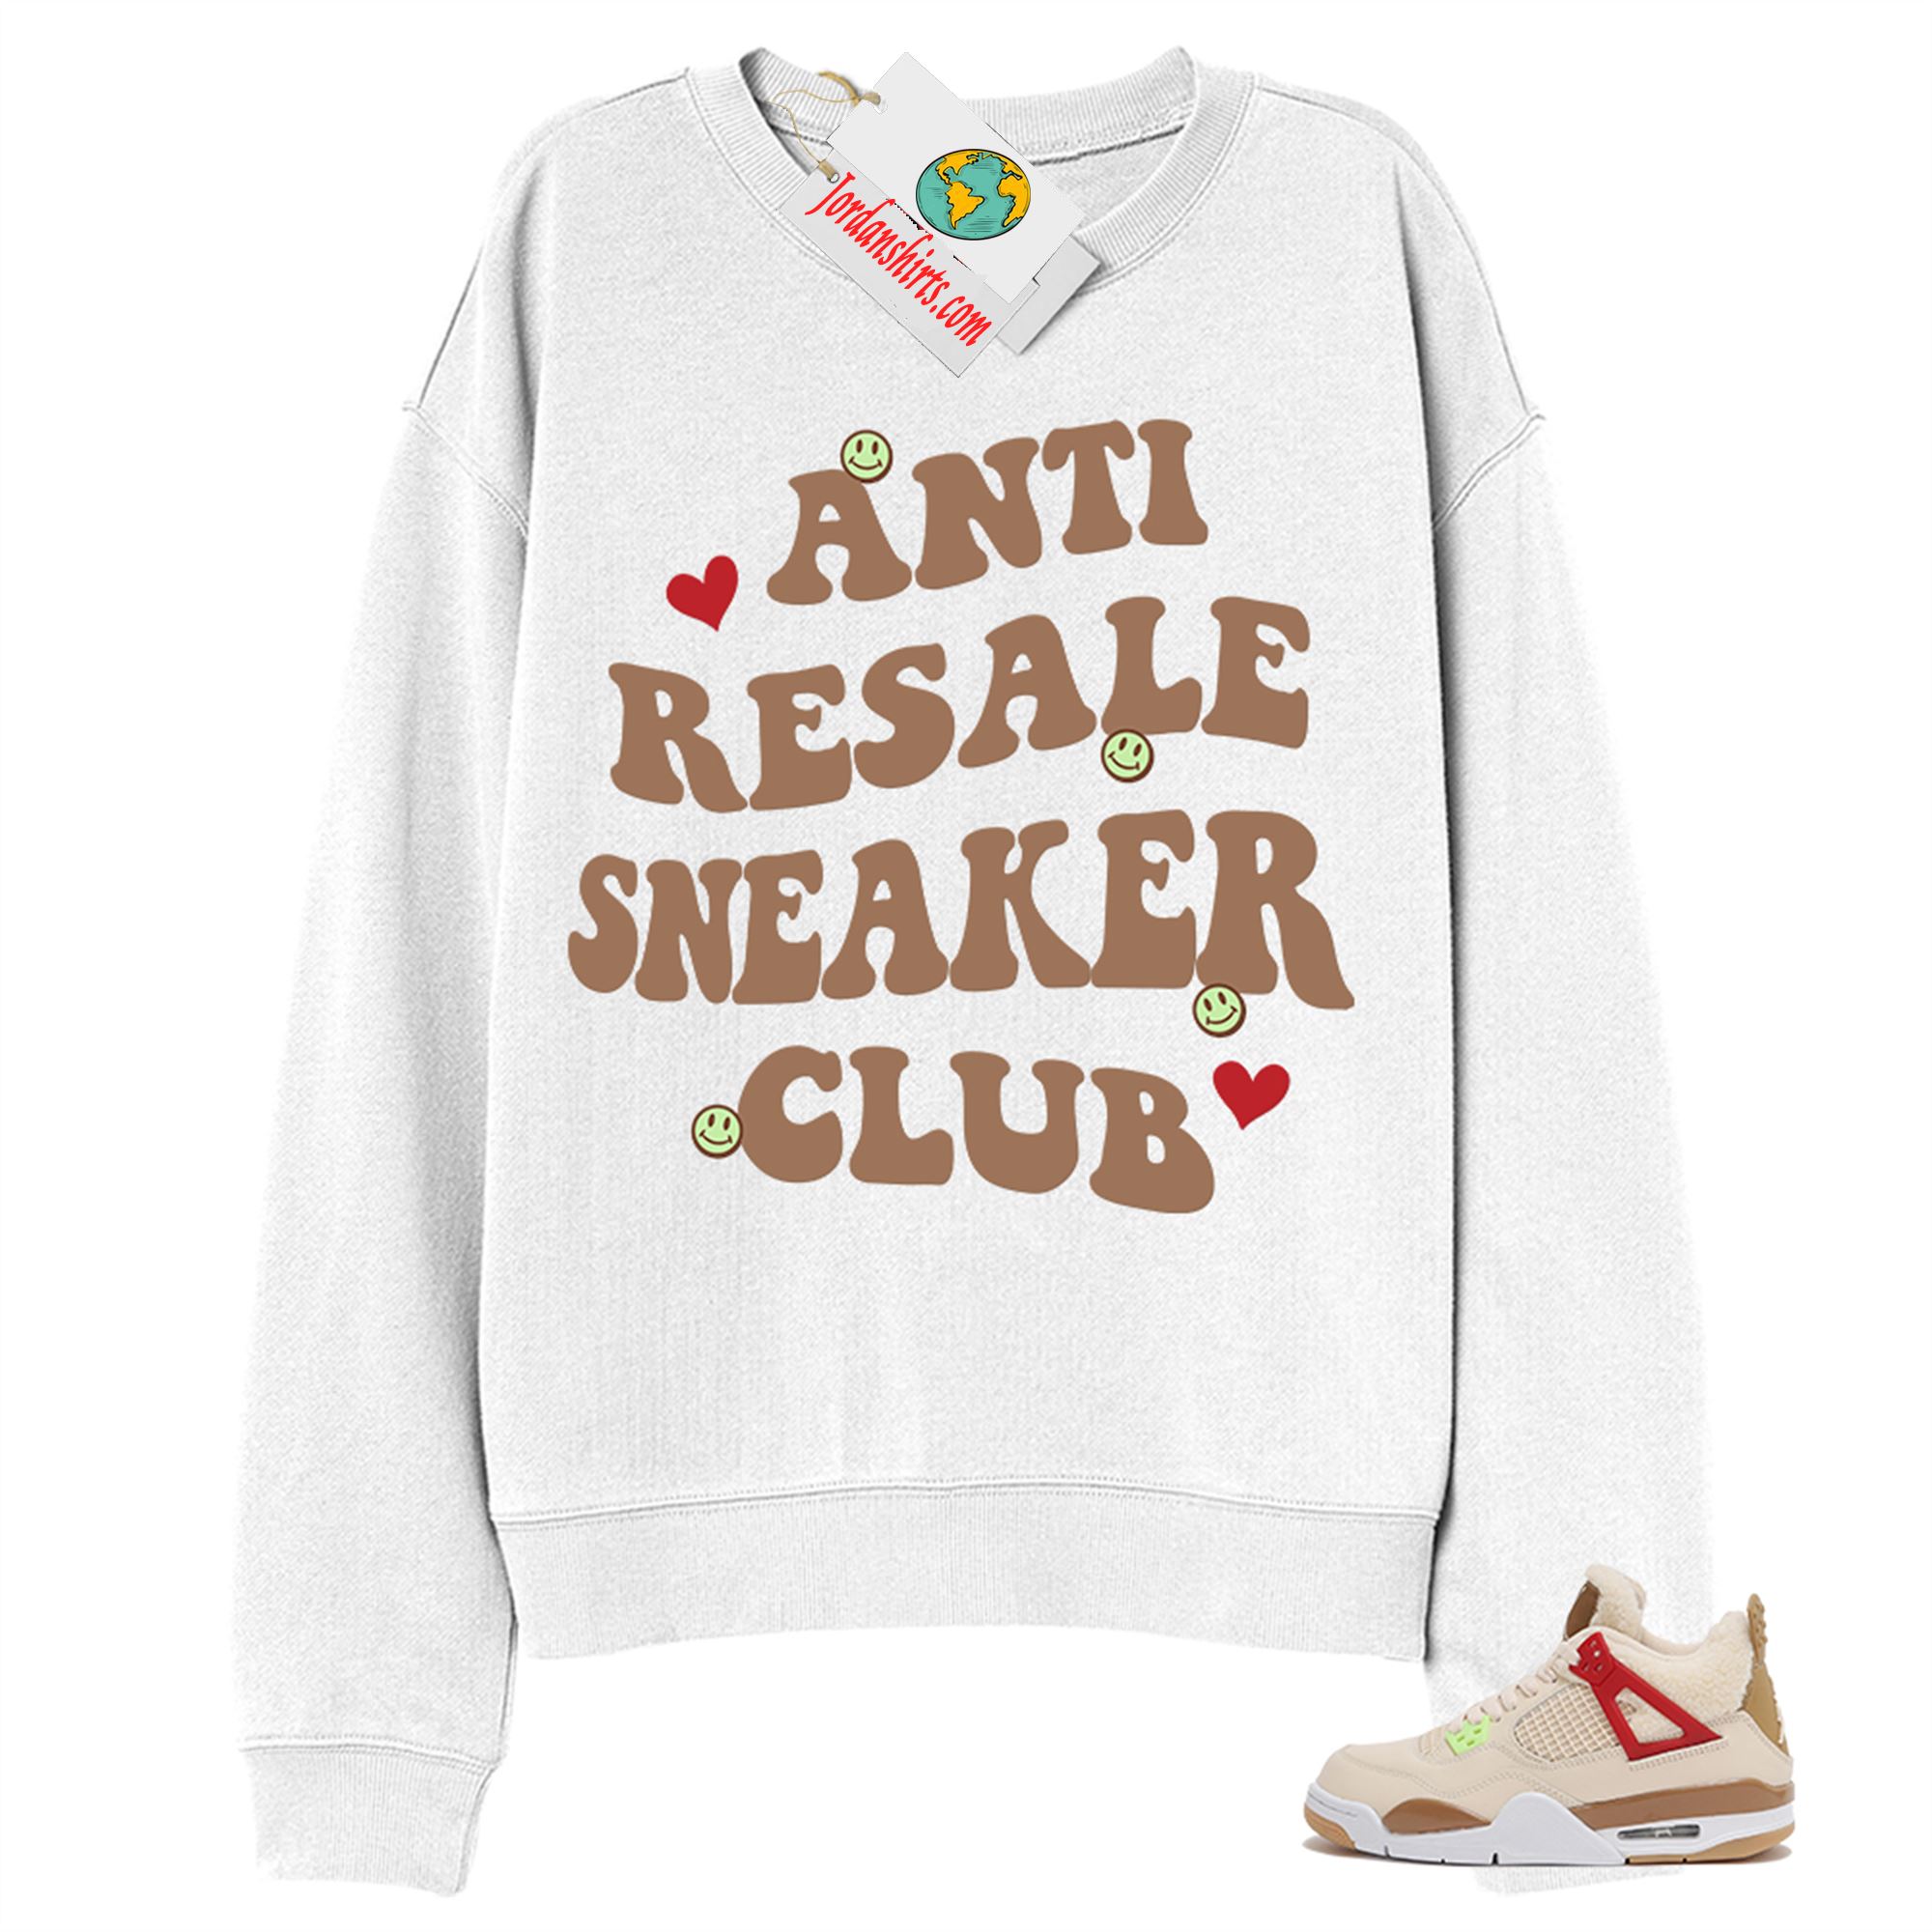 Jordan 4 Sweatshirt, Anti Resale Sneaker Club White Sweatshirt Air Jordan 4 Wild Things 4s Full Size Up To 5xl